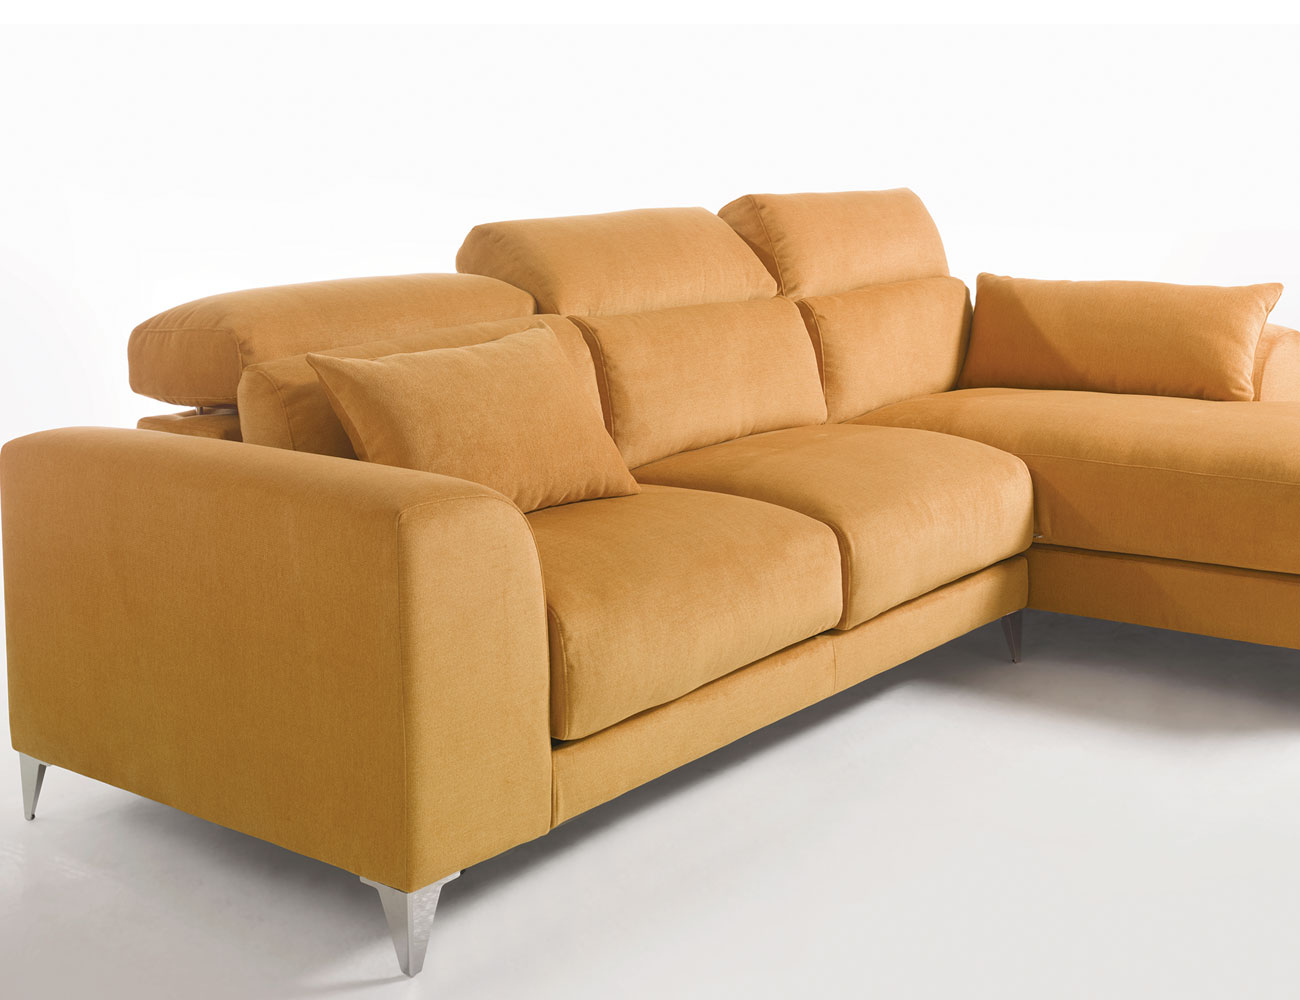 Sofa chaiselongue gran lujo decorativo patas altas amarillo 21